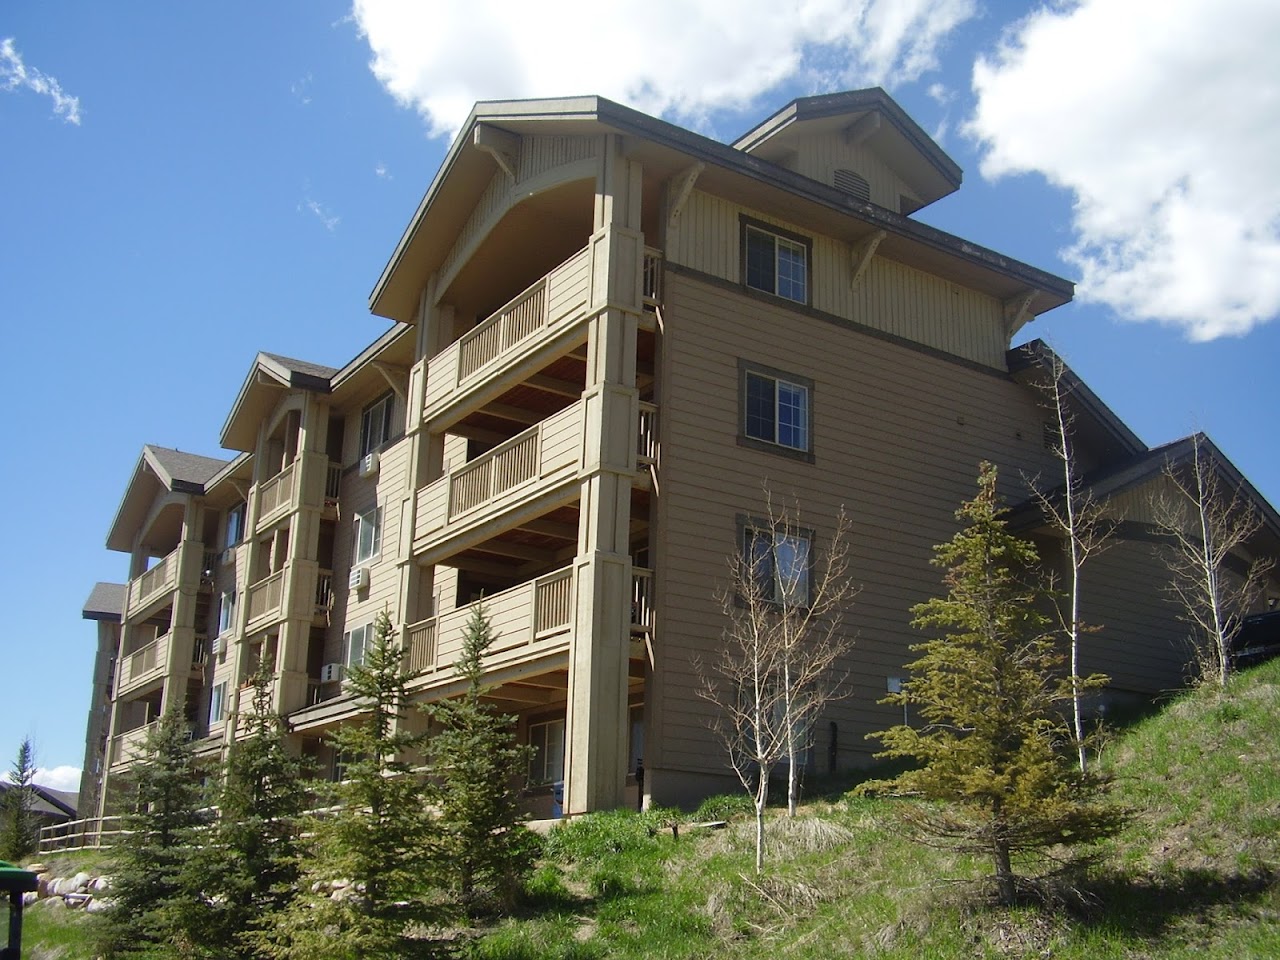 Photo of BUFFALO RIDGE II. Affordable housing located at 1020 SWIFT GULCH RD AVON, CO 